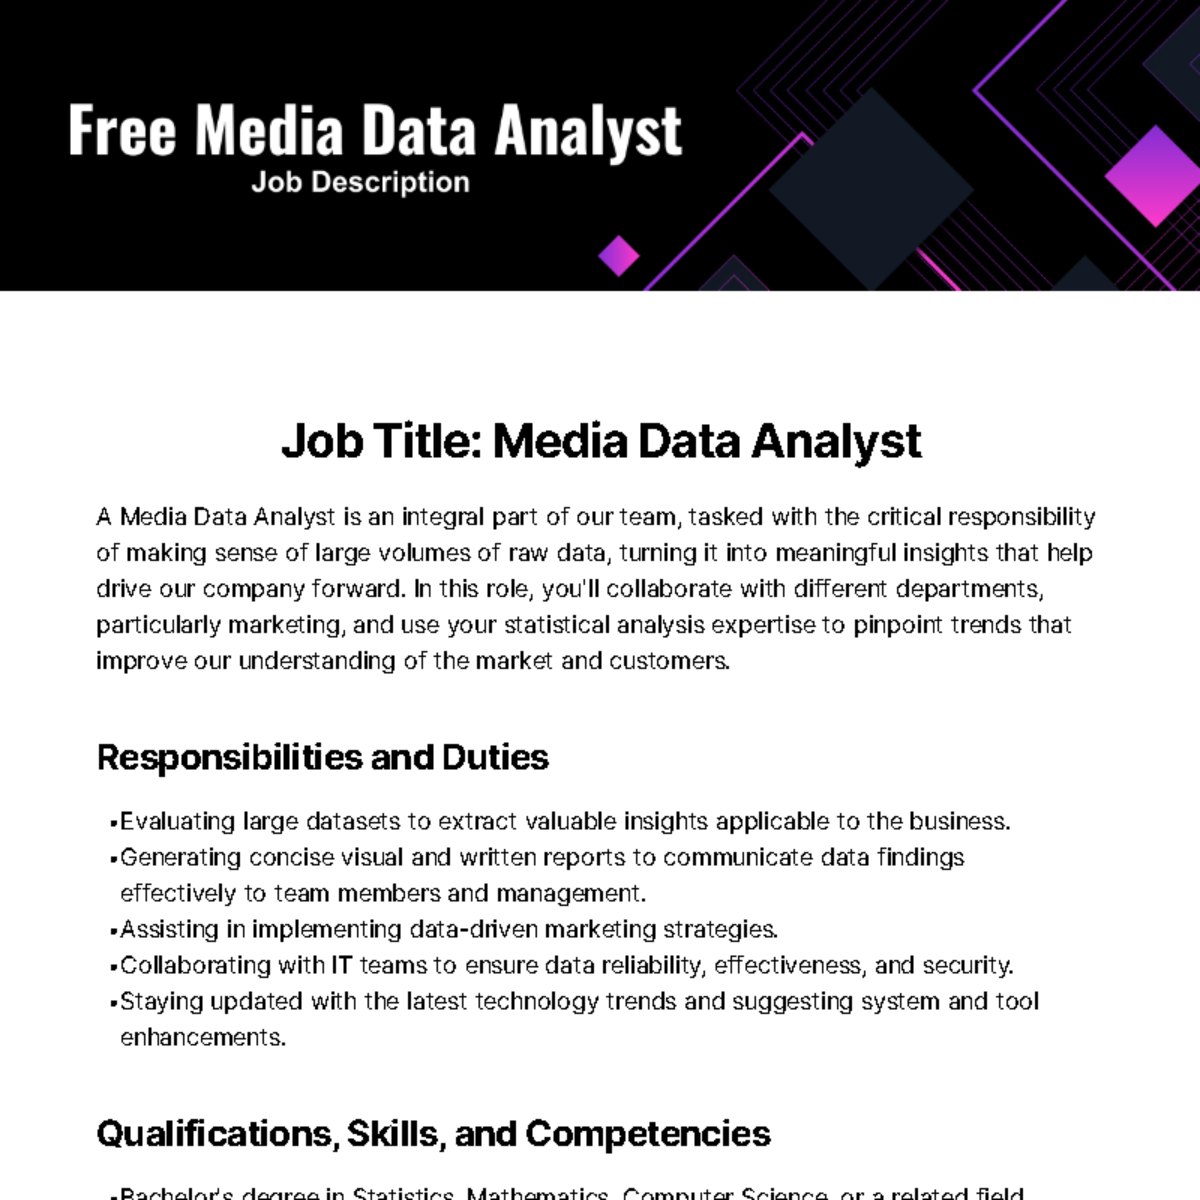 Free Media Data Analyst Job Description Template